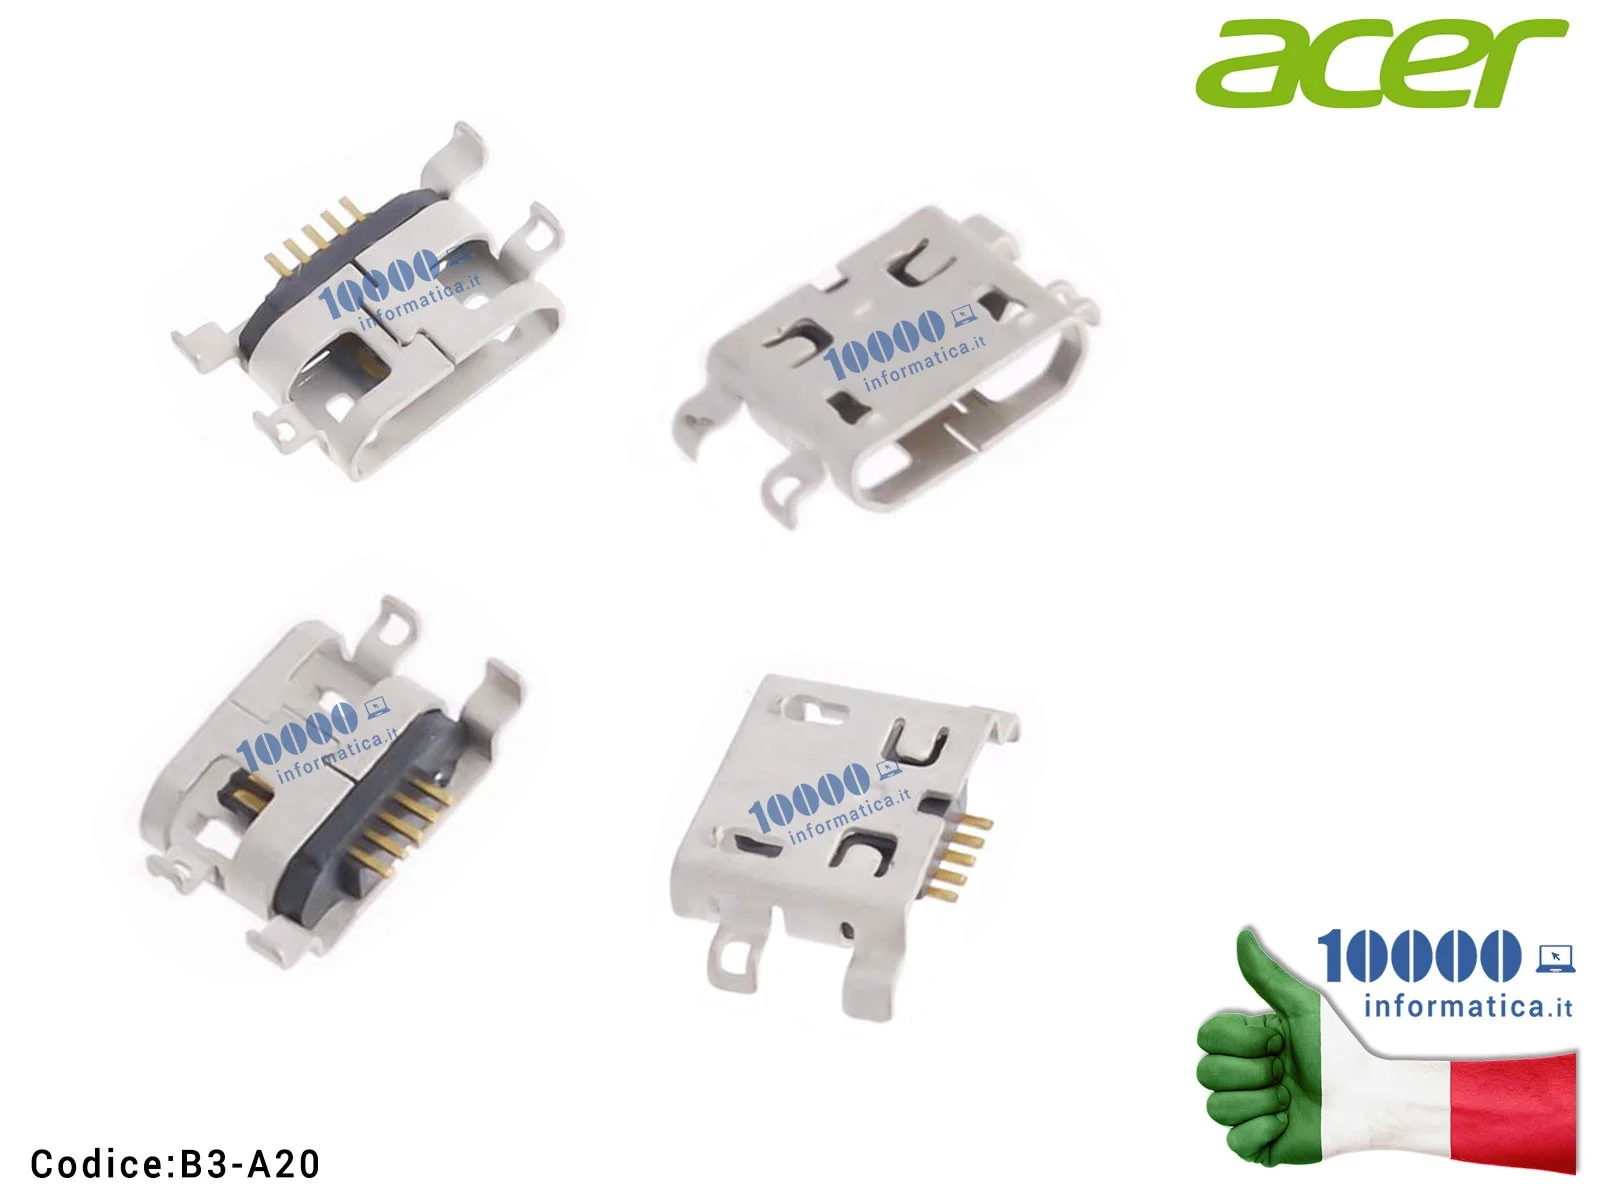 B3-A20 Connettore di Alimentazione micro USB DC Power Jack ACER One 7 B1-730 Iconia B3-A20 A5008